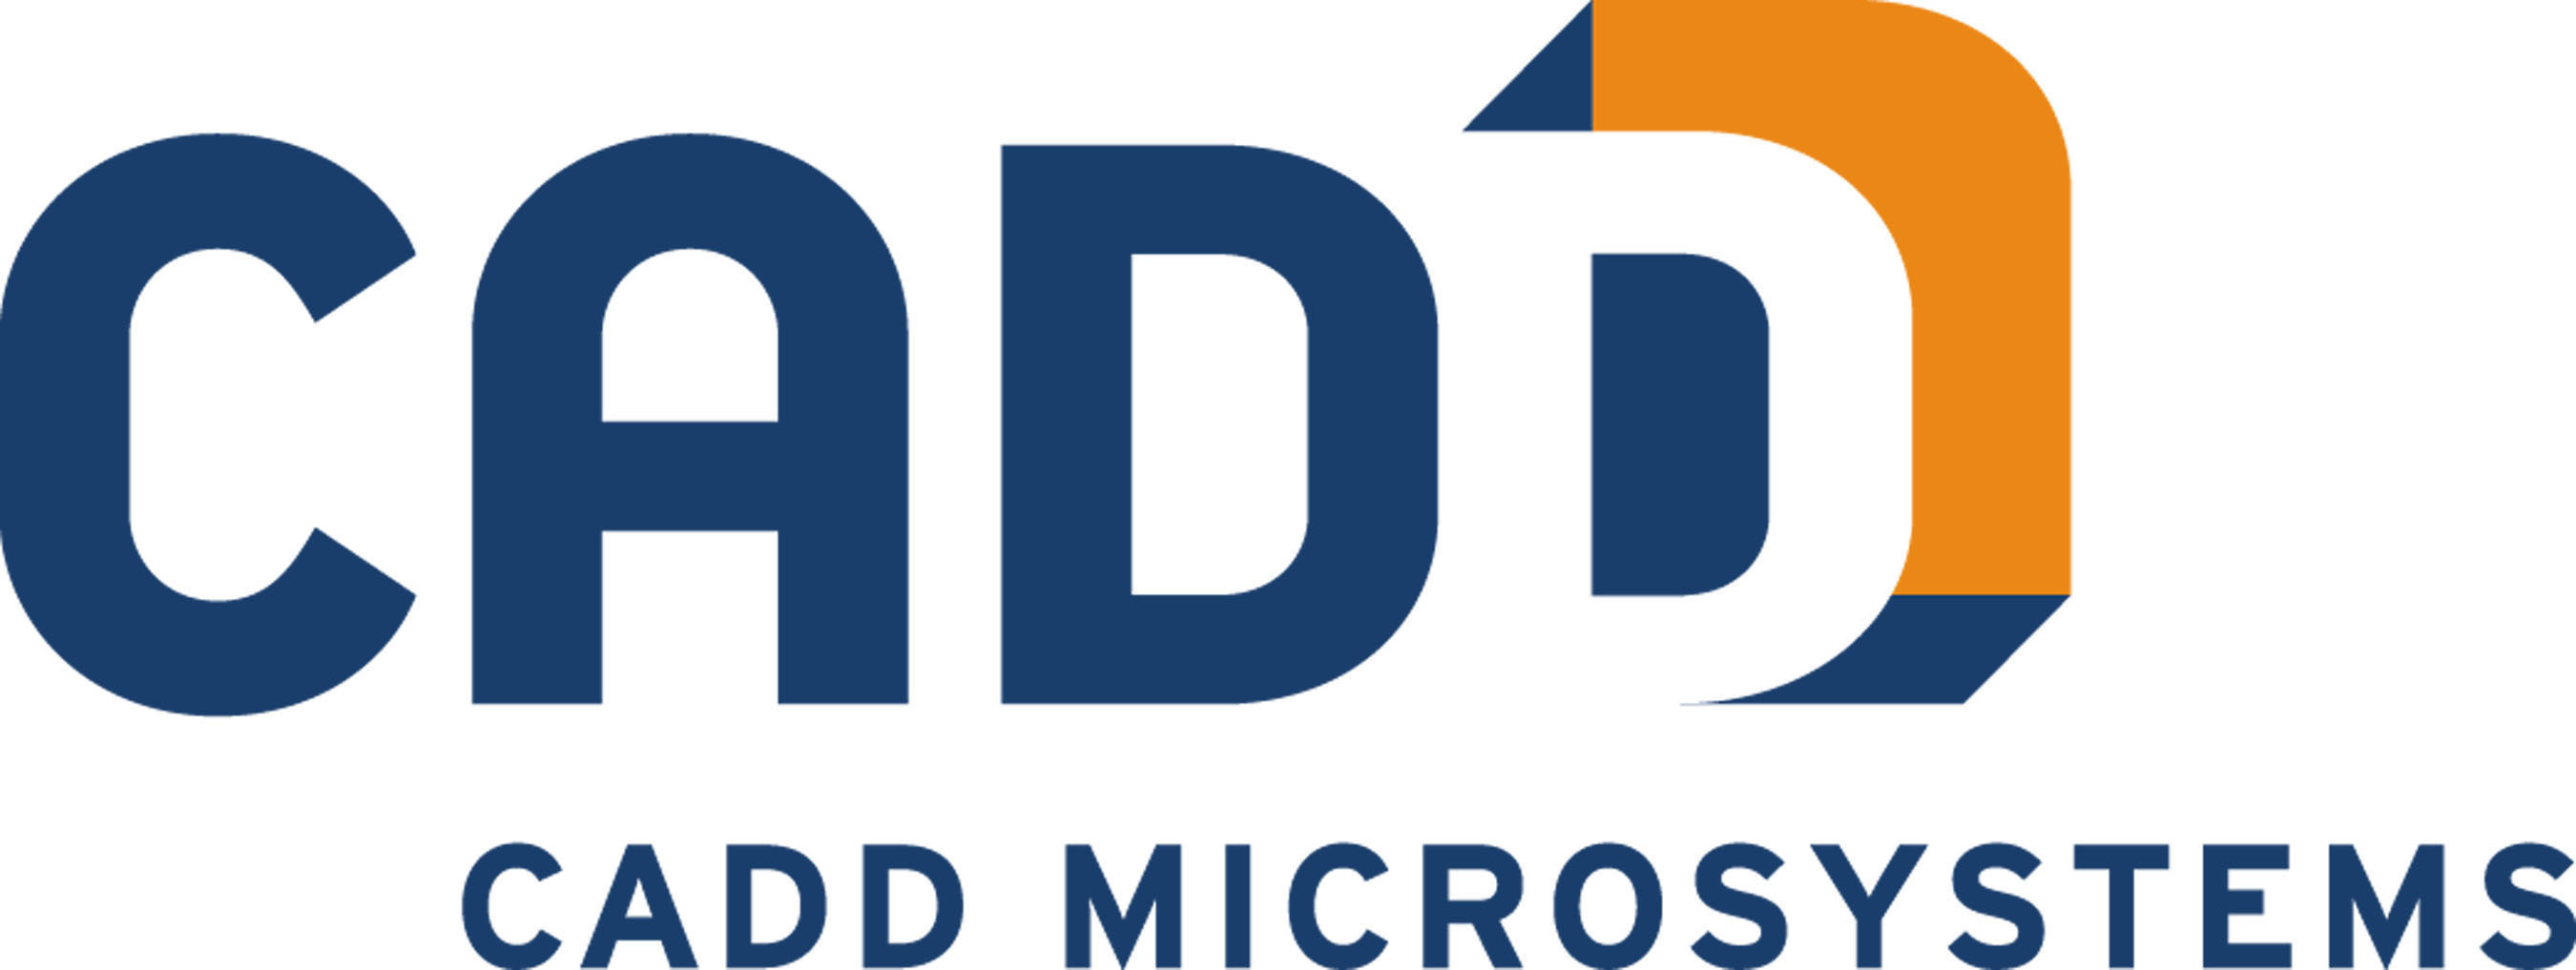 CADD Microsystems, an Autodesk Platinum Partner.